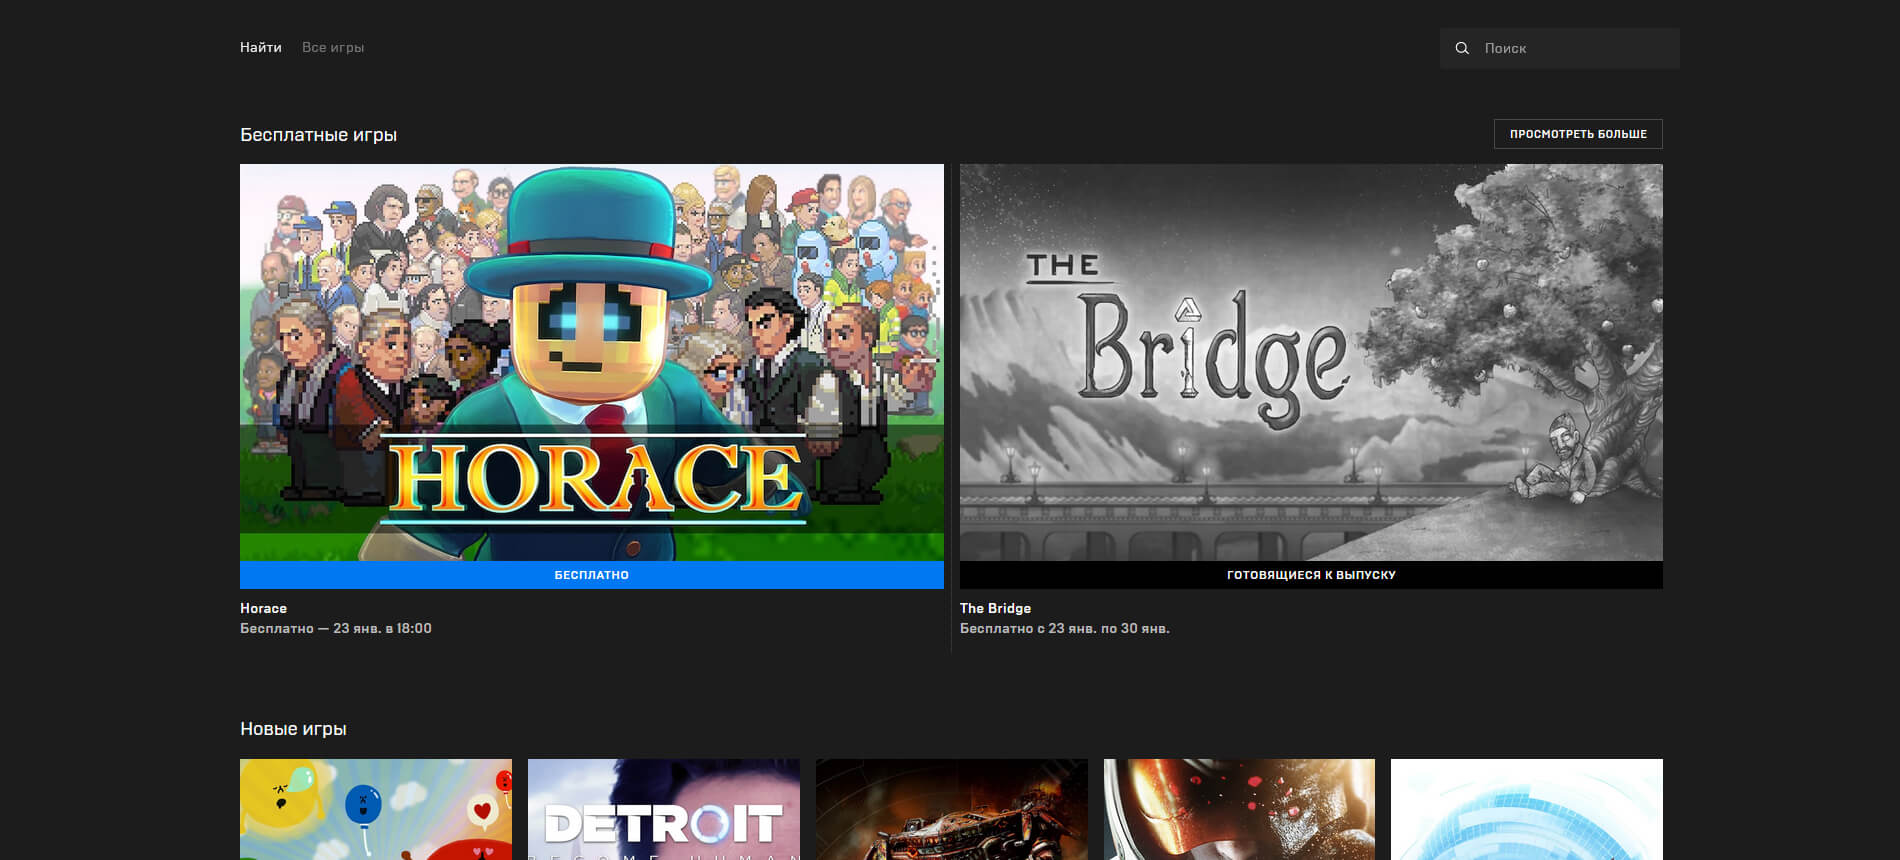 Epic Games Store: началась раздача Horace, следующая — The Bridge (фото)